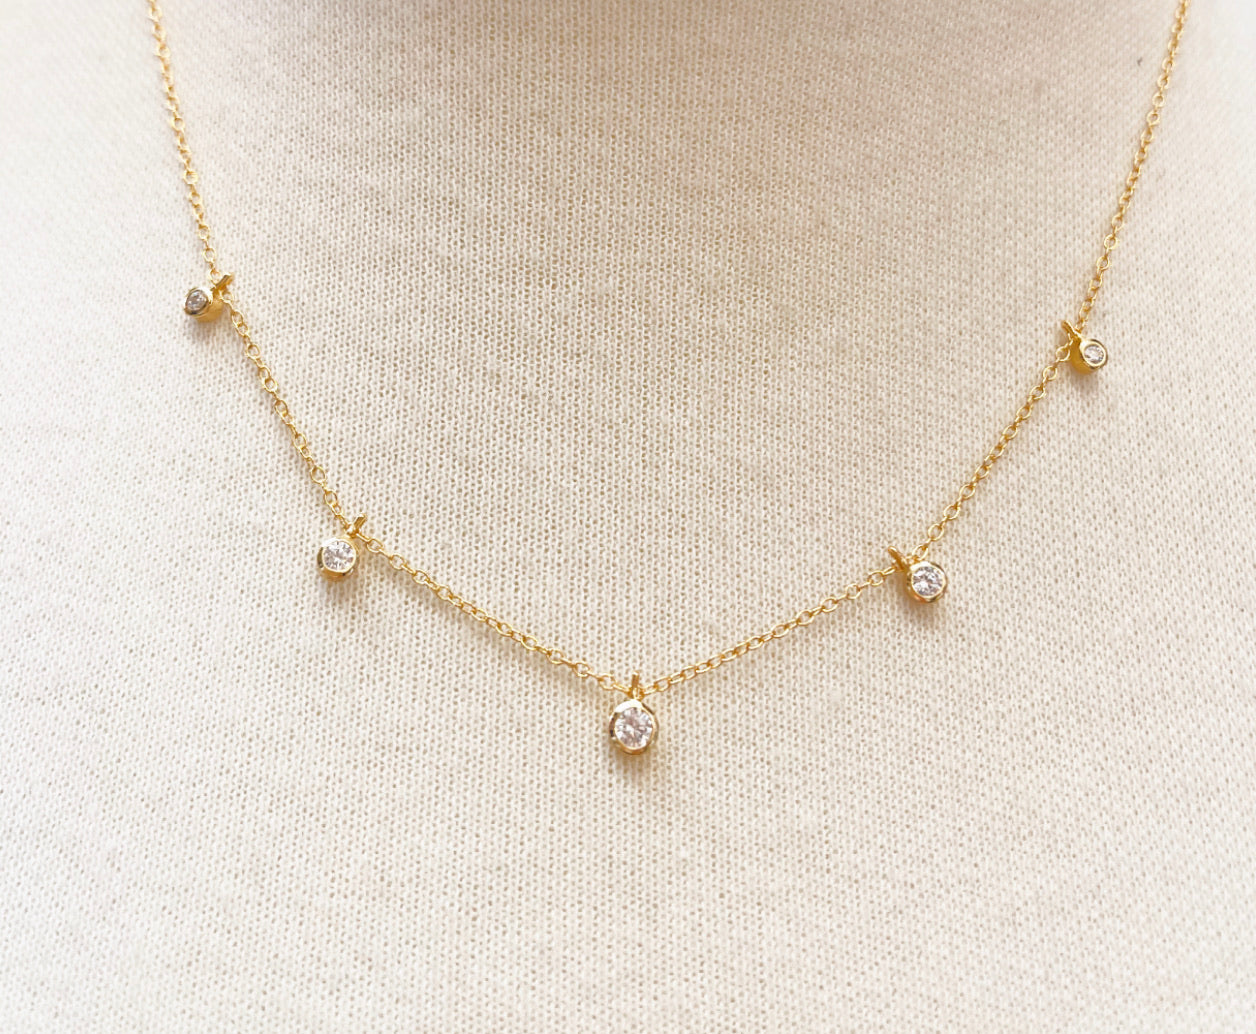 Floating Solitaire Diamond Pendant | Lauren B Jewelry